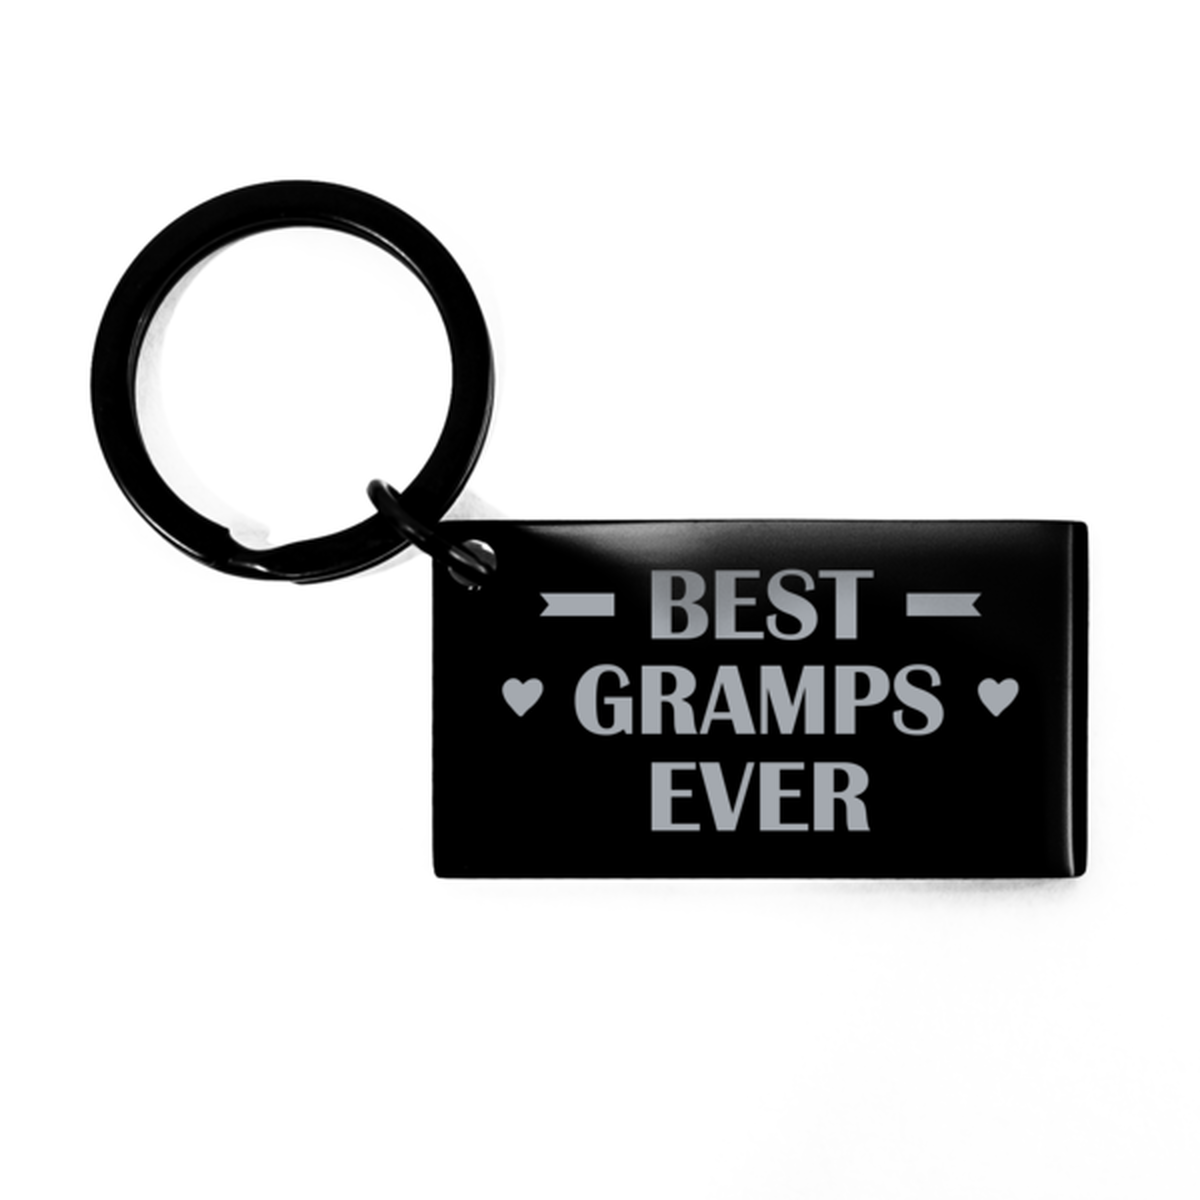 Best Gramps Ever Gramps Gifts, Funny Black Keychain For Gramps, Birthday Engraved Keyring Presents For Men